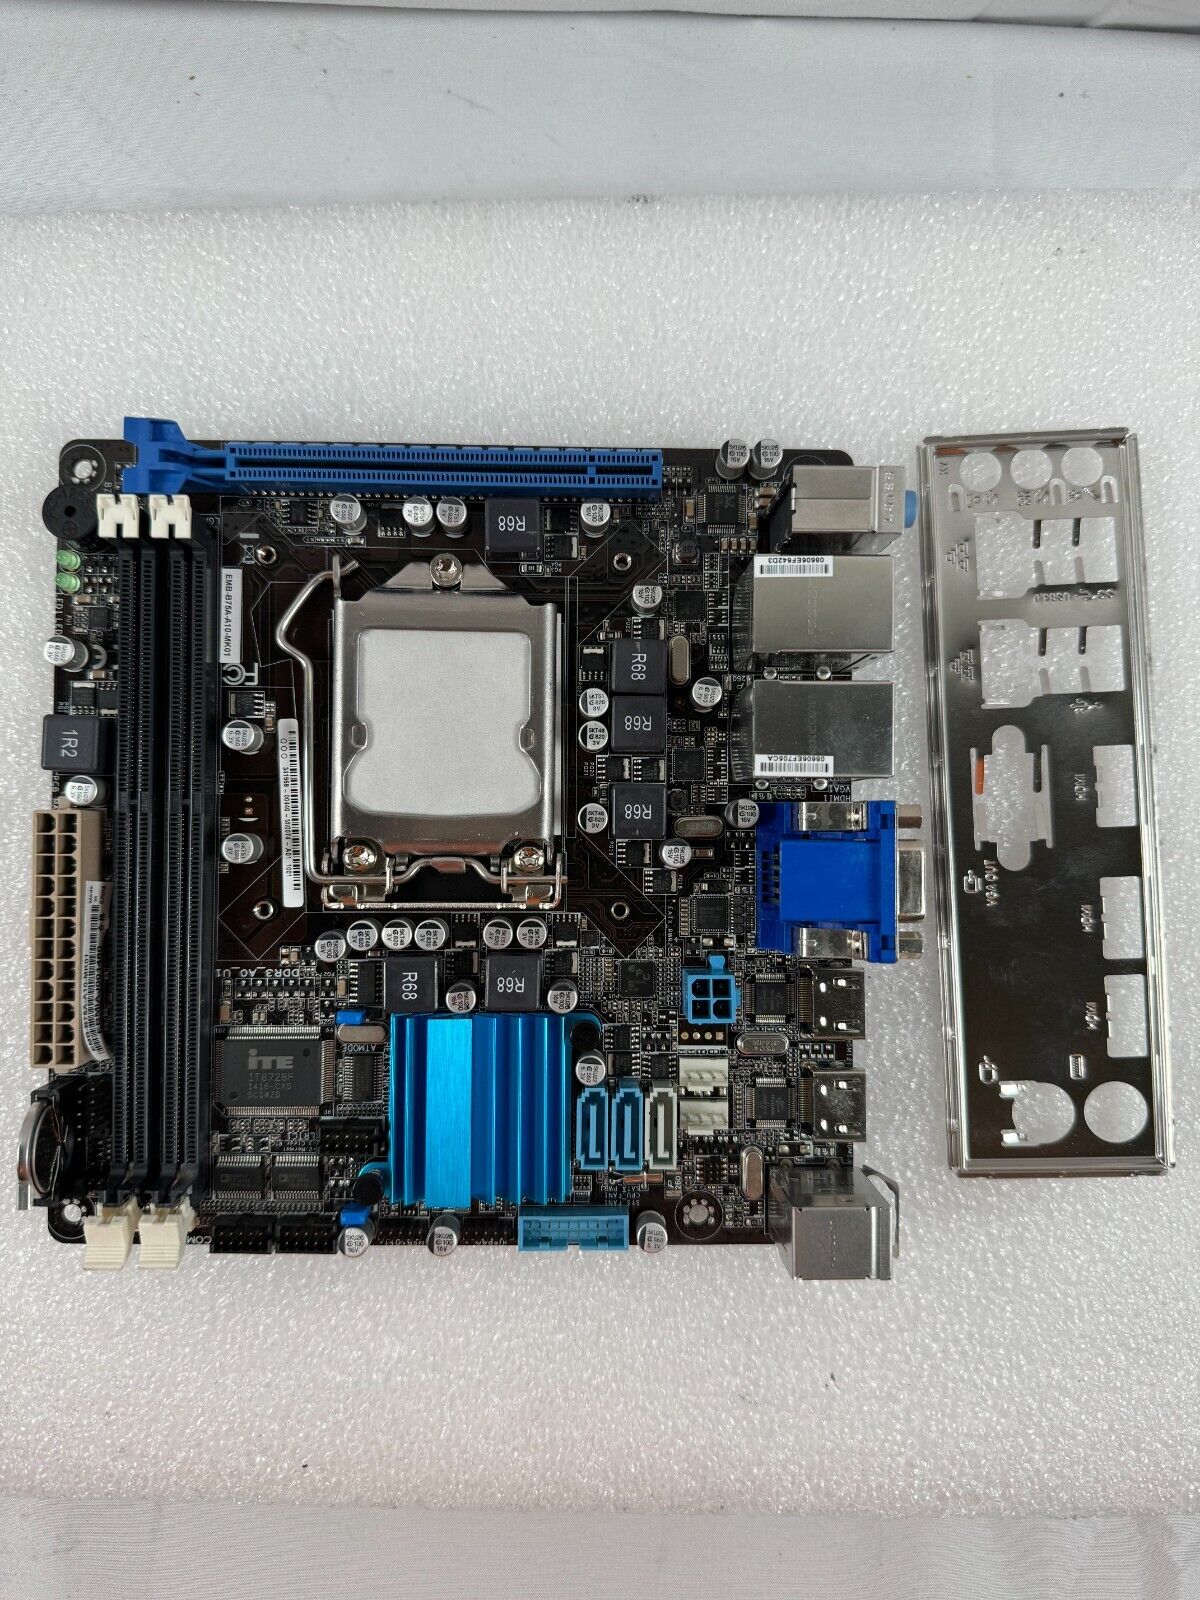 Aaeon EMB-B75A-A10-MK01 Mini-ITX Motherboard w/I/O Shield; Tested & Working